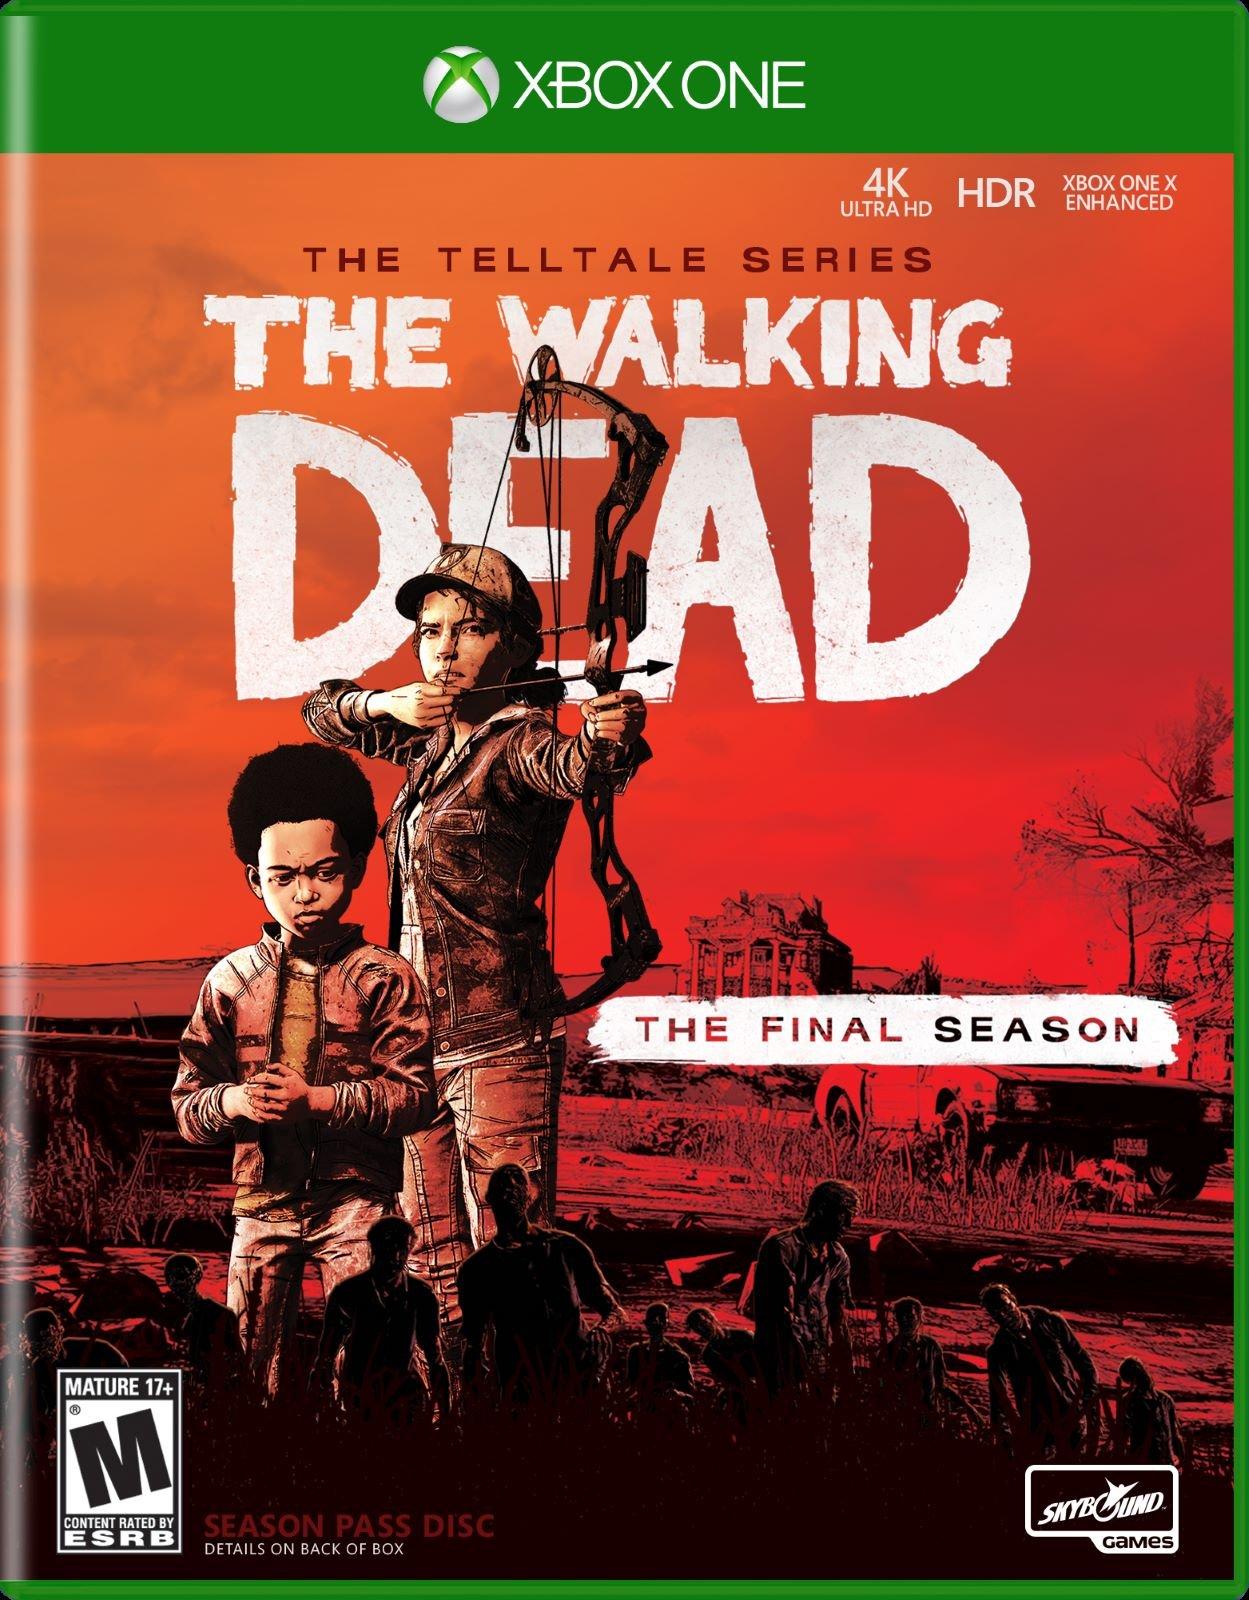 the walking dead season 1 xbox one